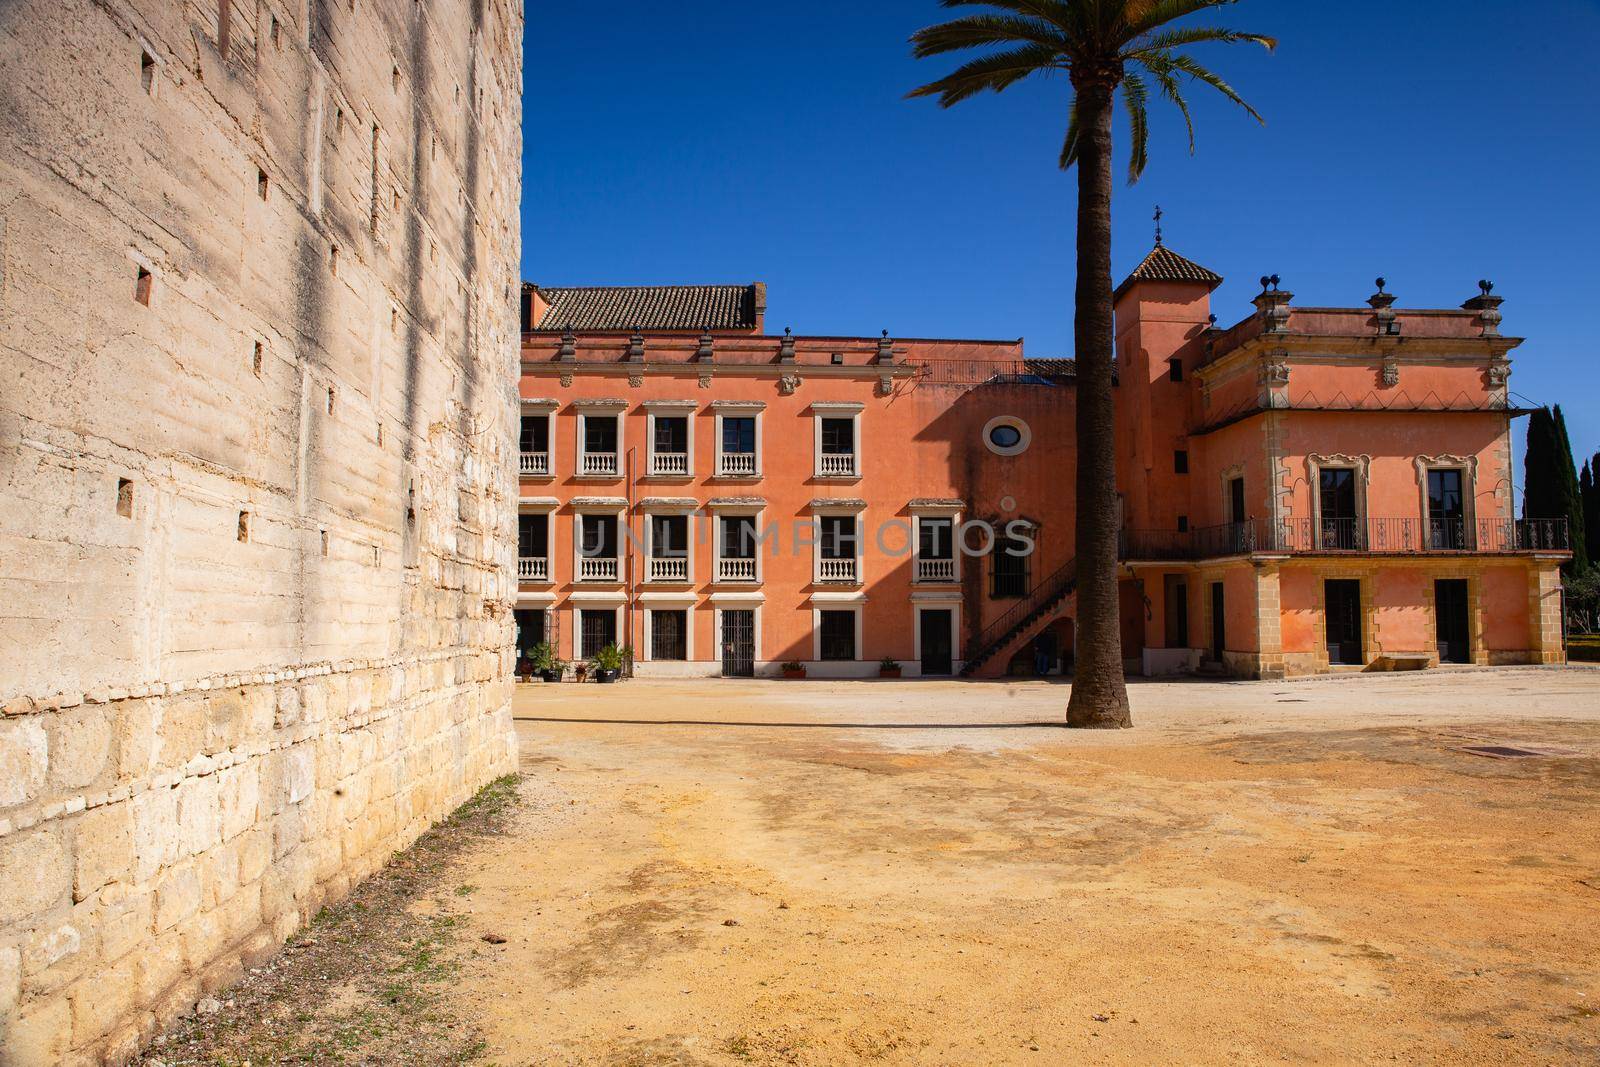 In the Alcázar of Jerez de la Frontera, Spain. It is a former Moorish alcázar, now housing a park, in Jerez de la Frontera, in the South of Spain. It was declared a Bien de Interés Cultural in 1931.